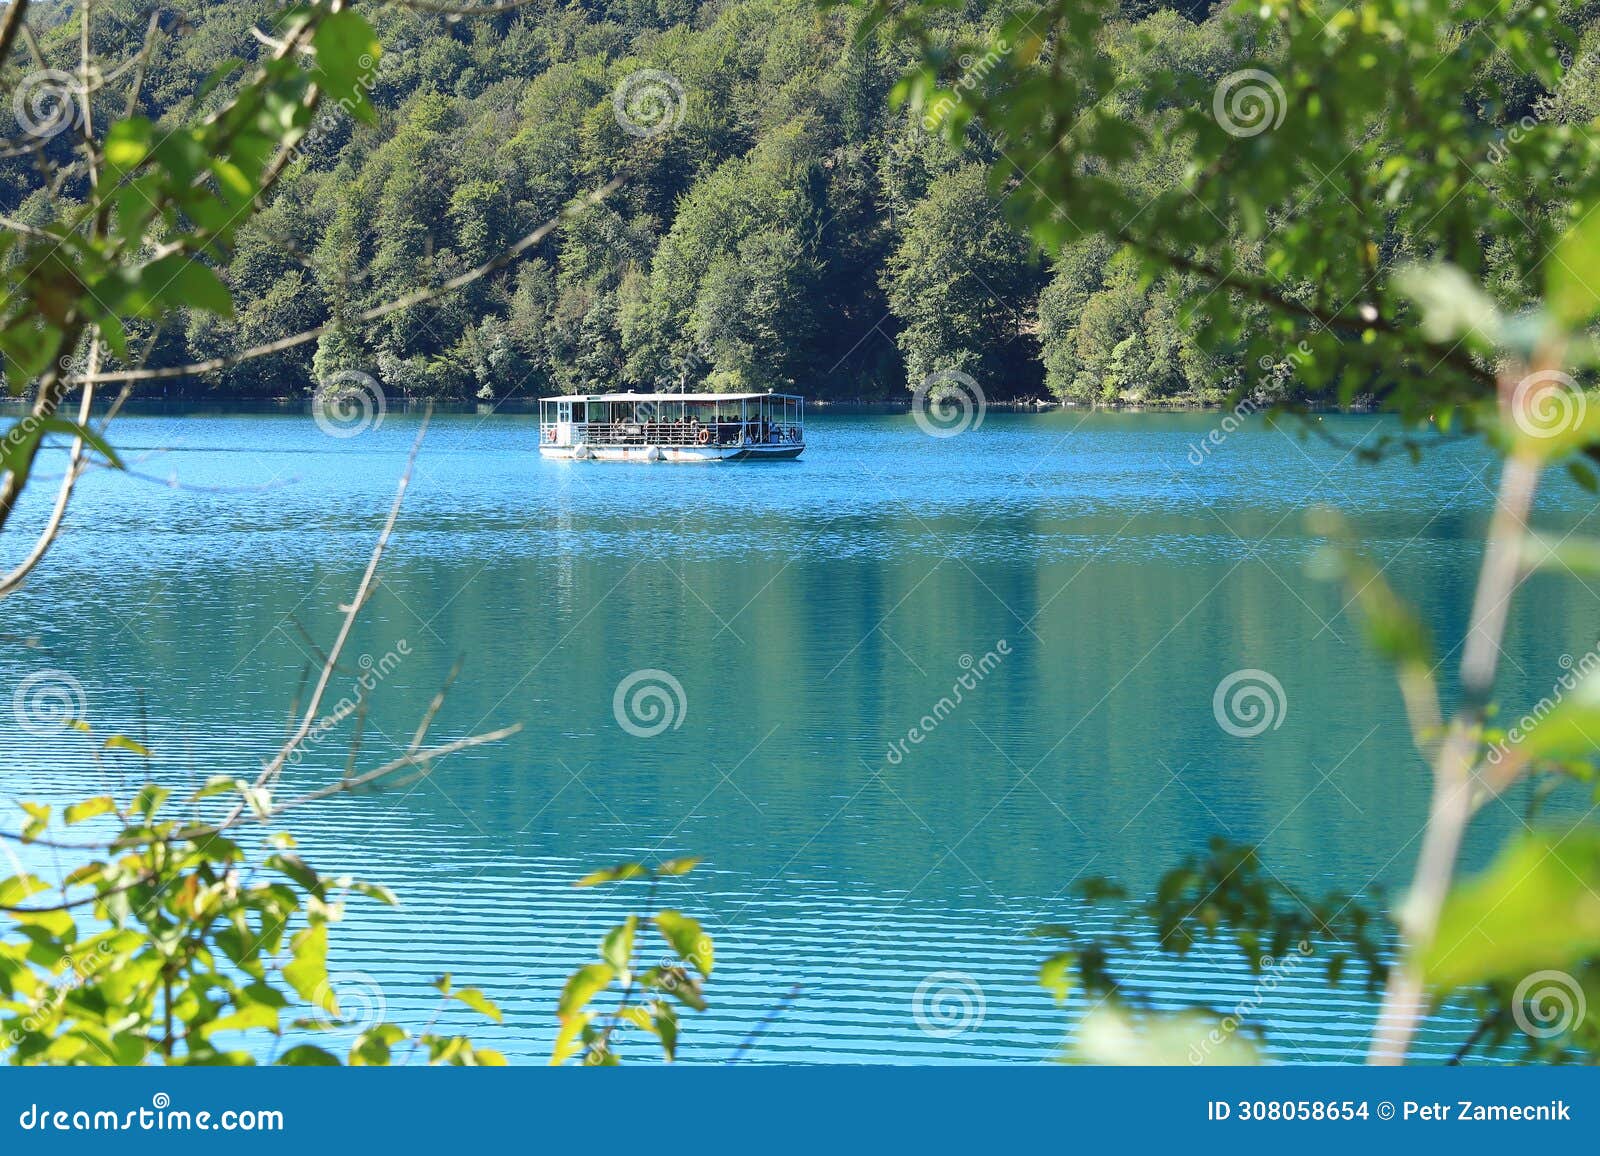 boat on lake jezero kozjak on plitvicka jezera in croatia